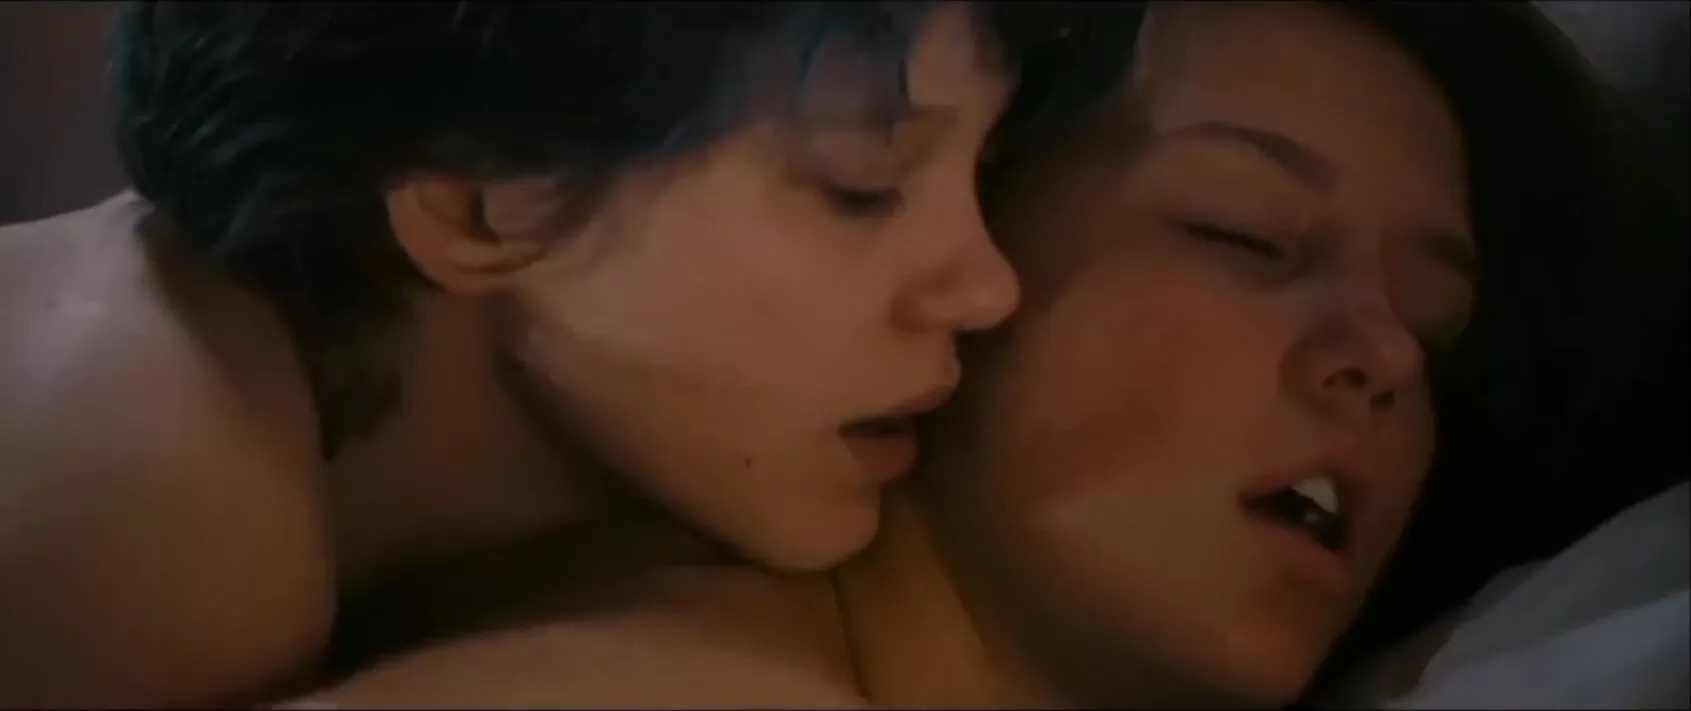 Lesbians sex scene